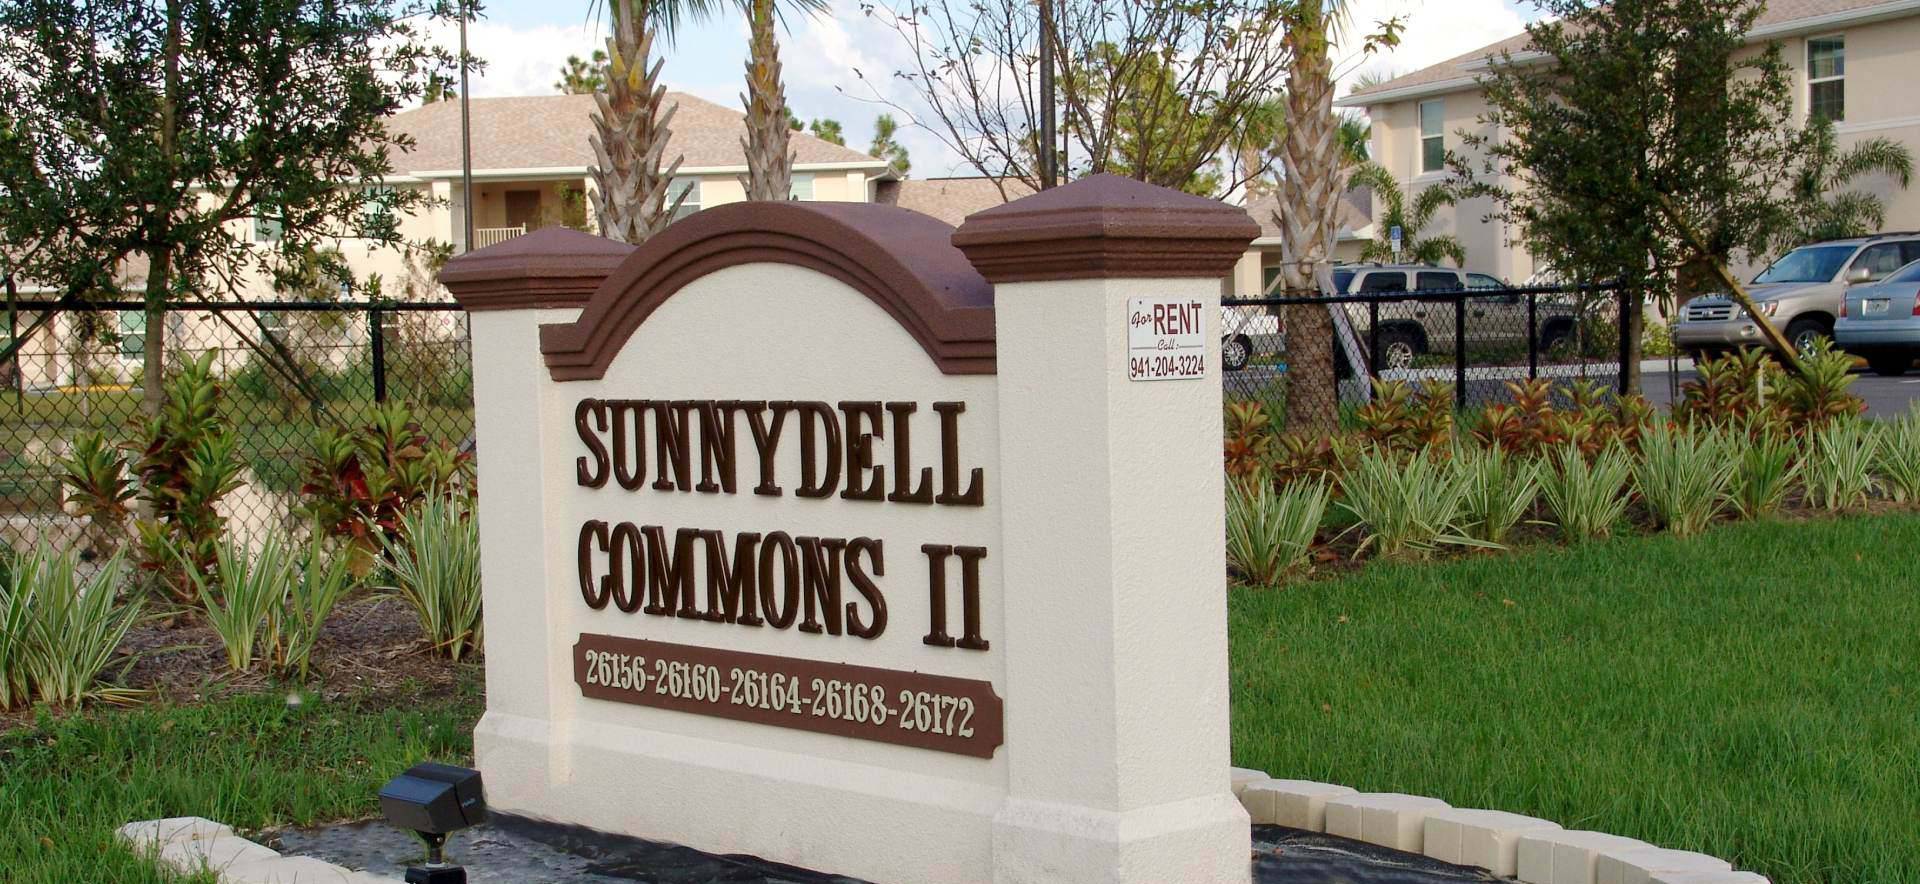 Sunnydell-Commons-II-Apartment-Rentals-in-Punta-Gorda-FL-